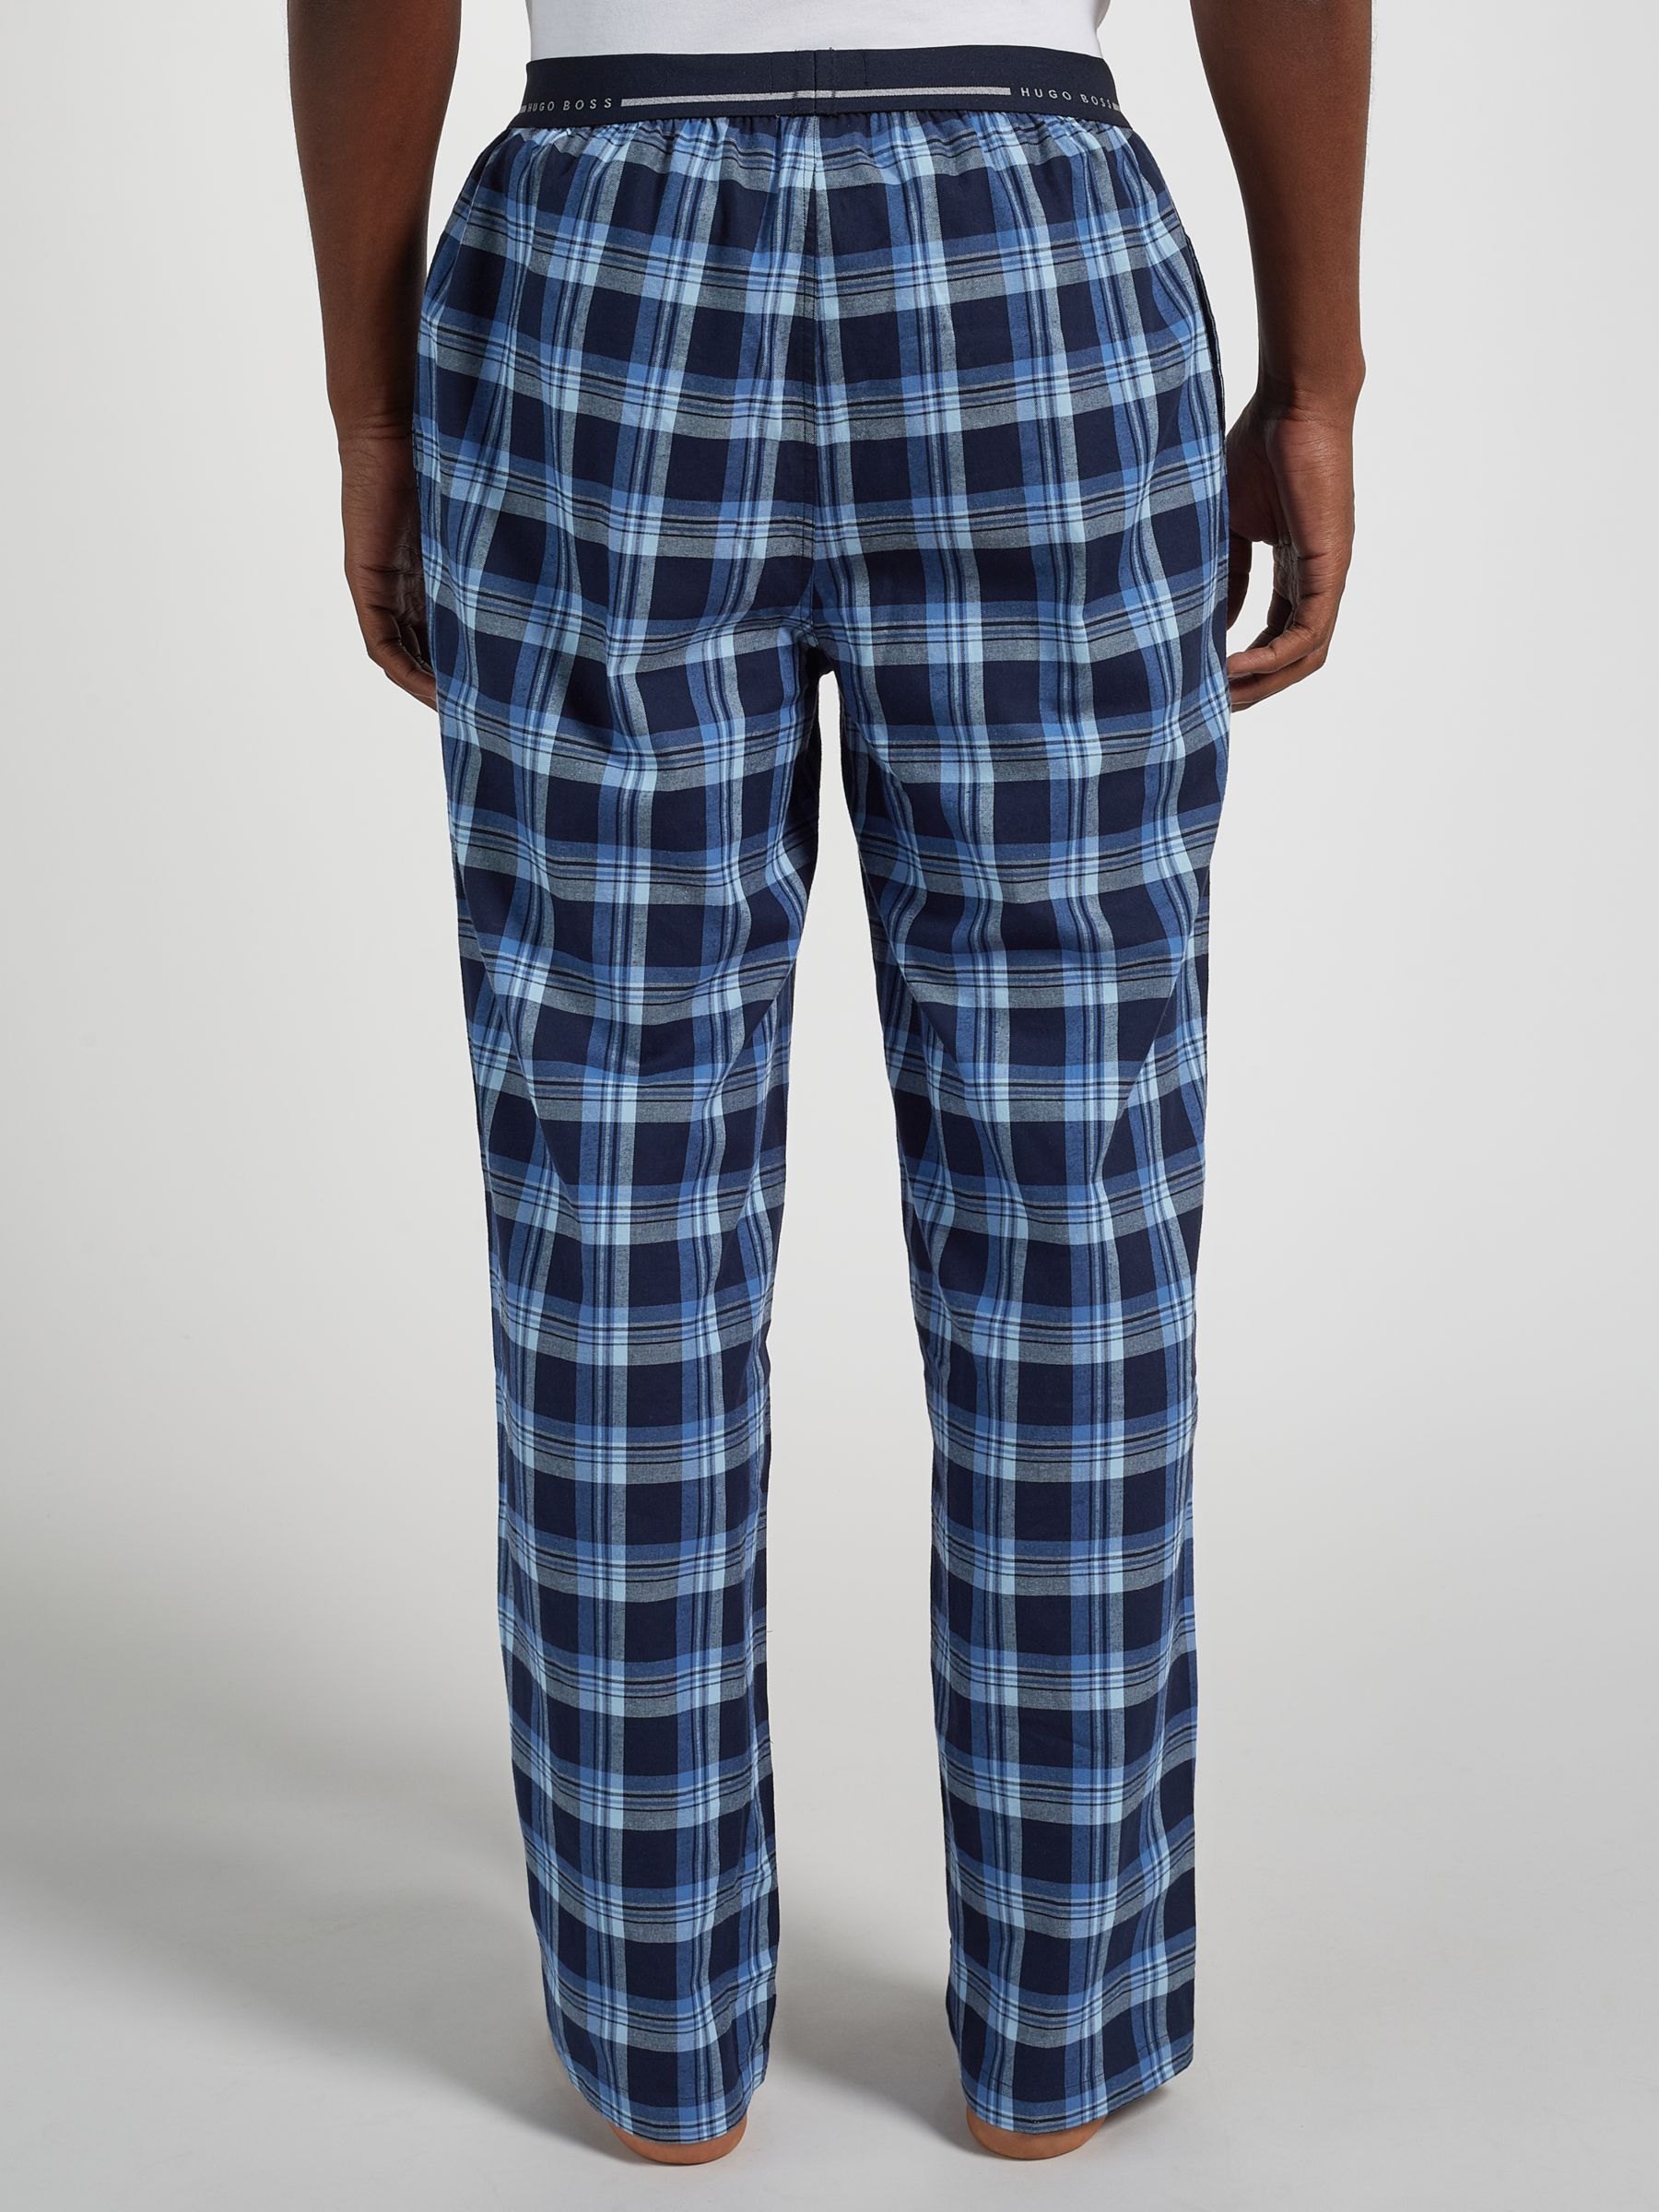 hugo boss pyjama bottoms